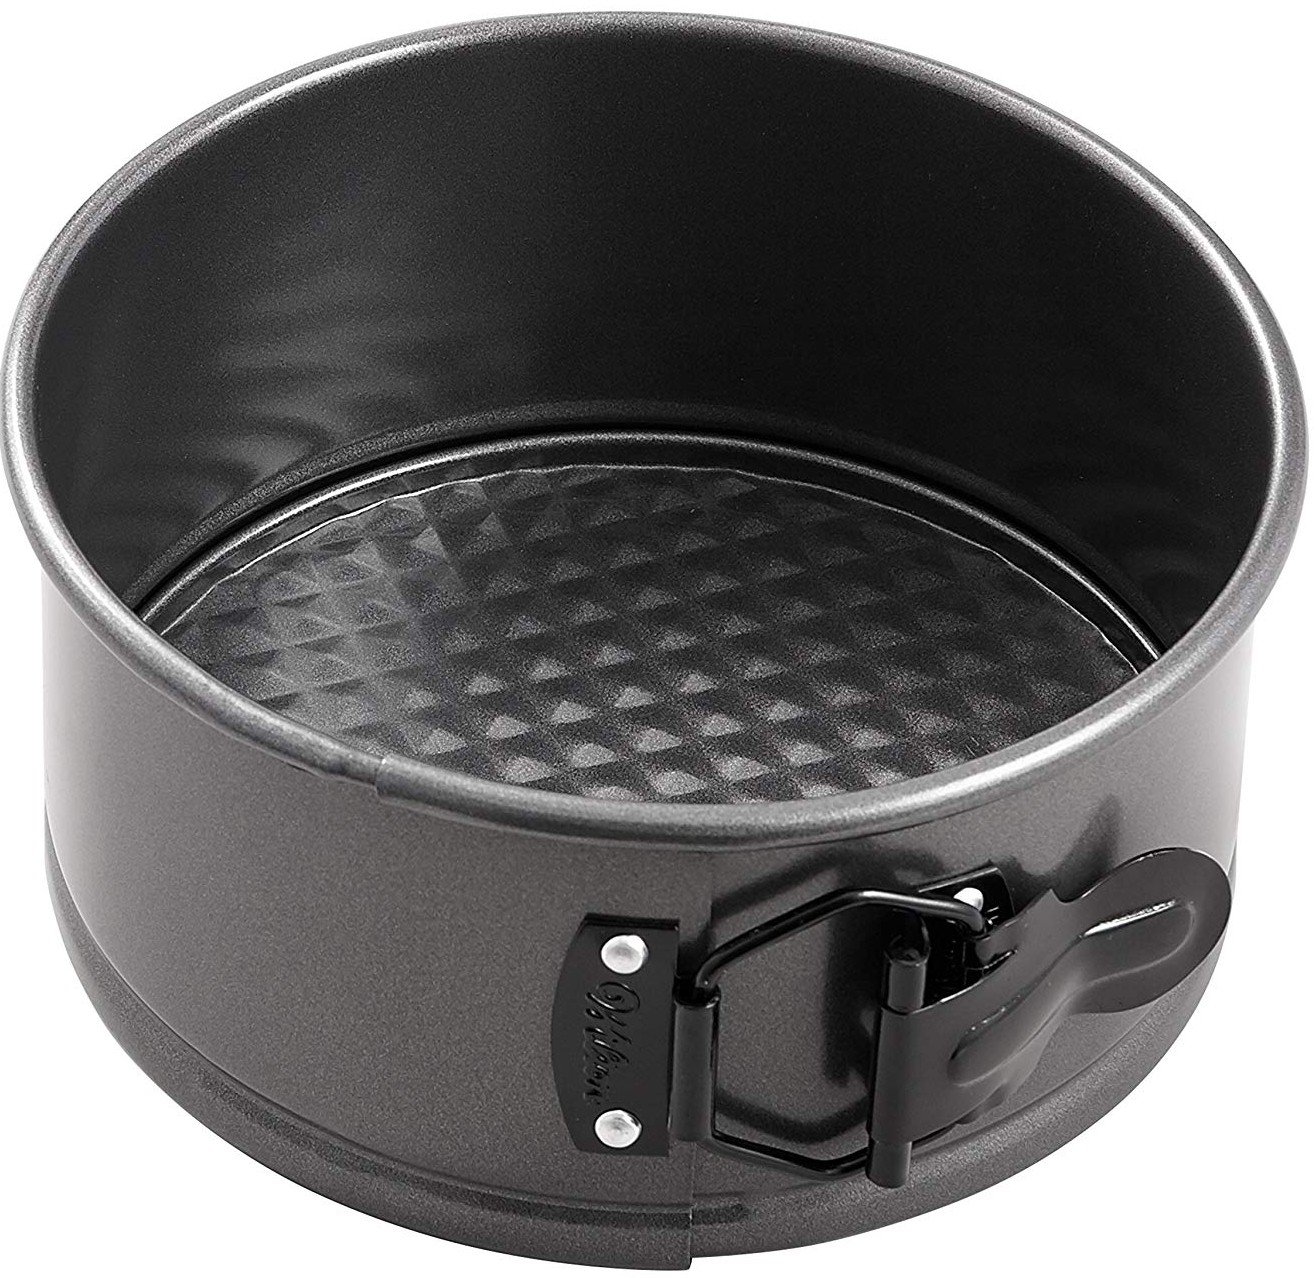 Wilton springform pan